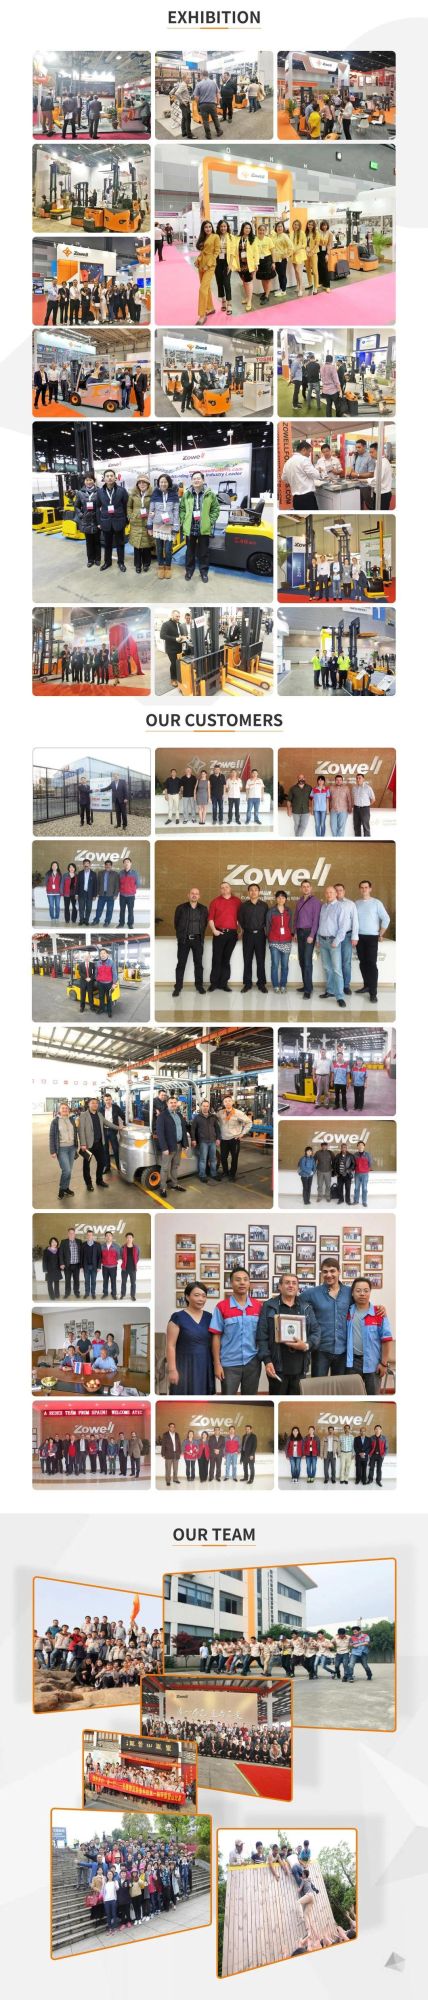 High Performance Zowell Self-Propelled Platform Hydraulic Work Scissor Lift Table Aerial Operation